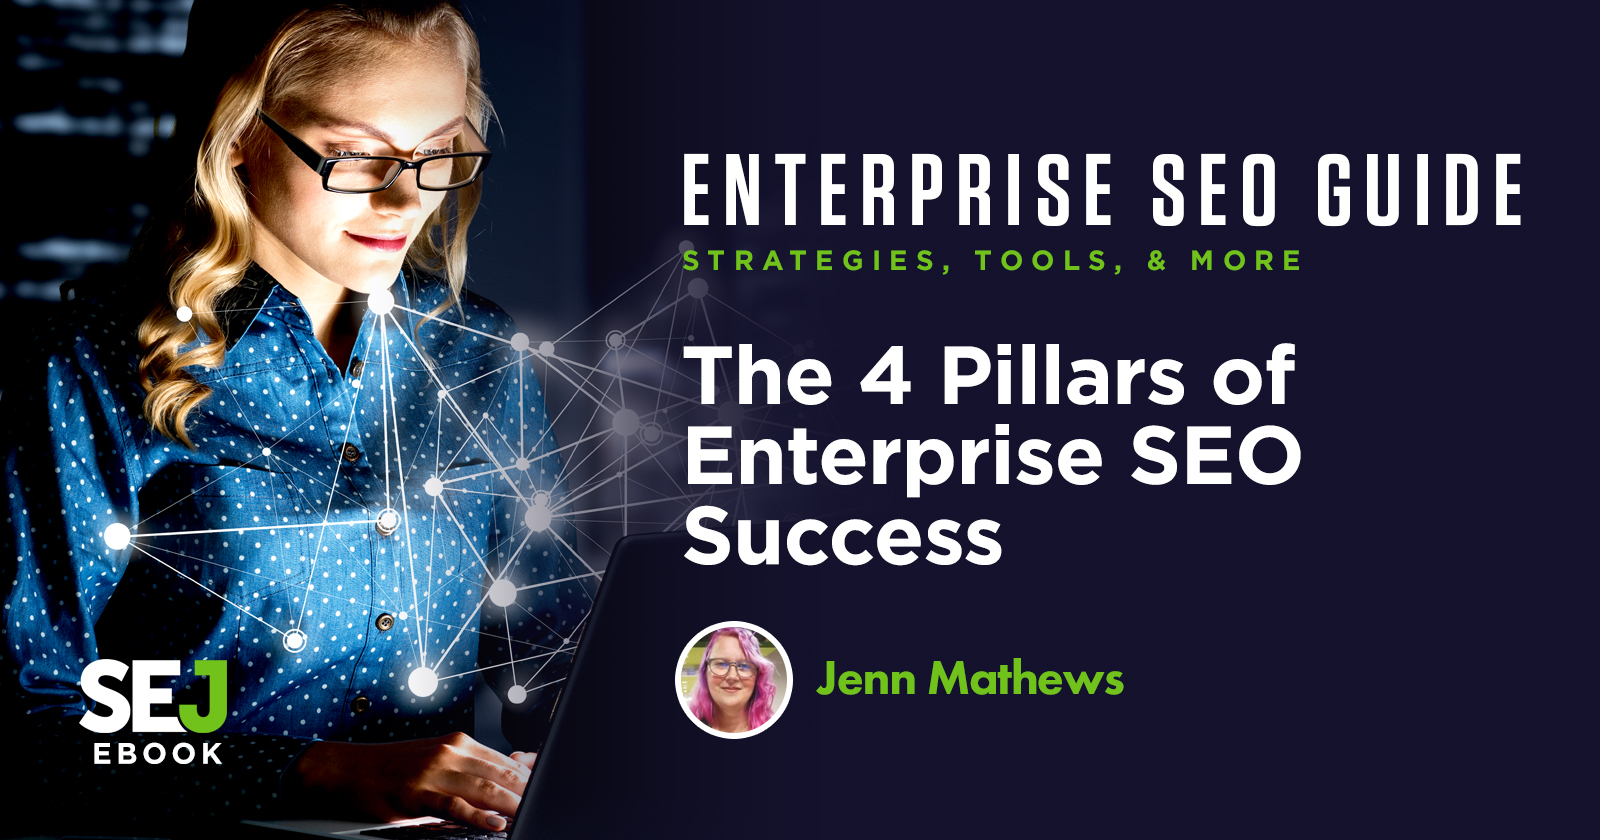 The 4 Pillars of Enterprise SEO Success.-Jenn Mathews